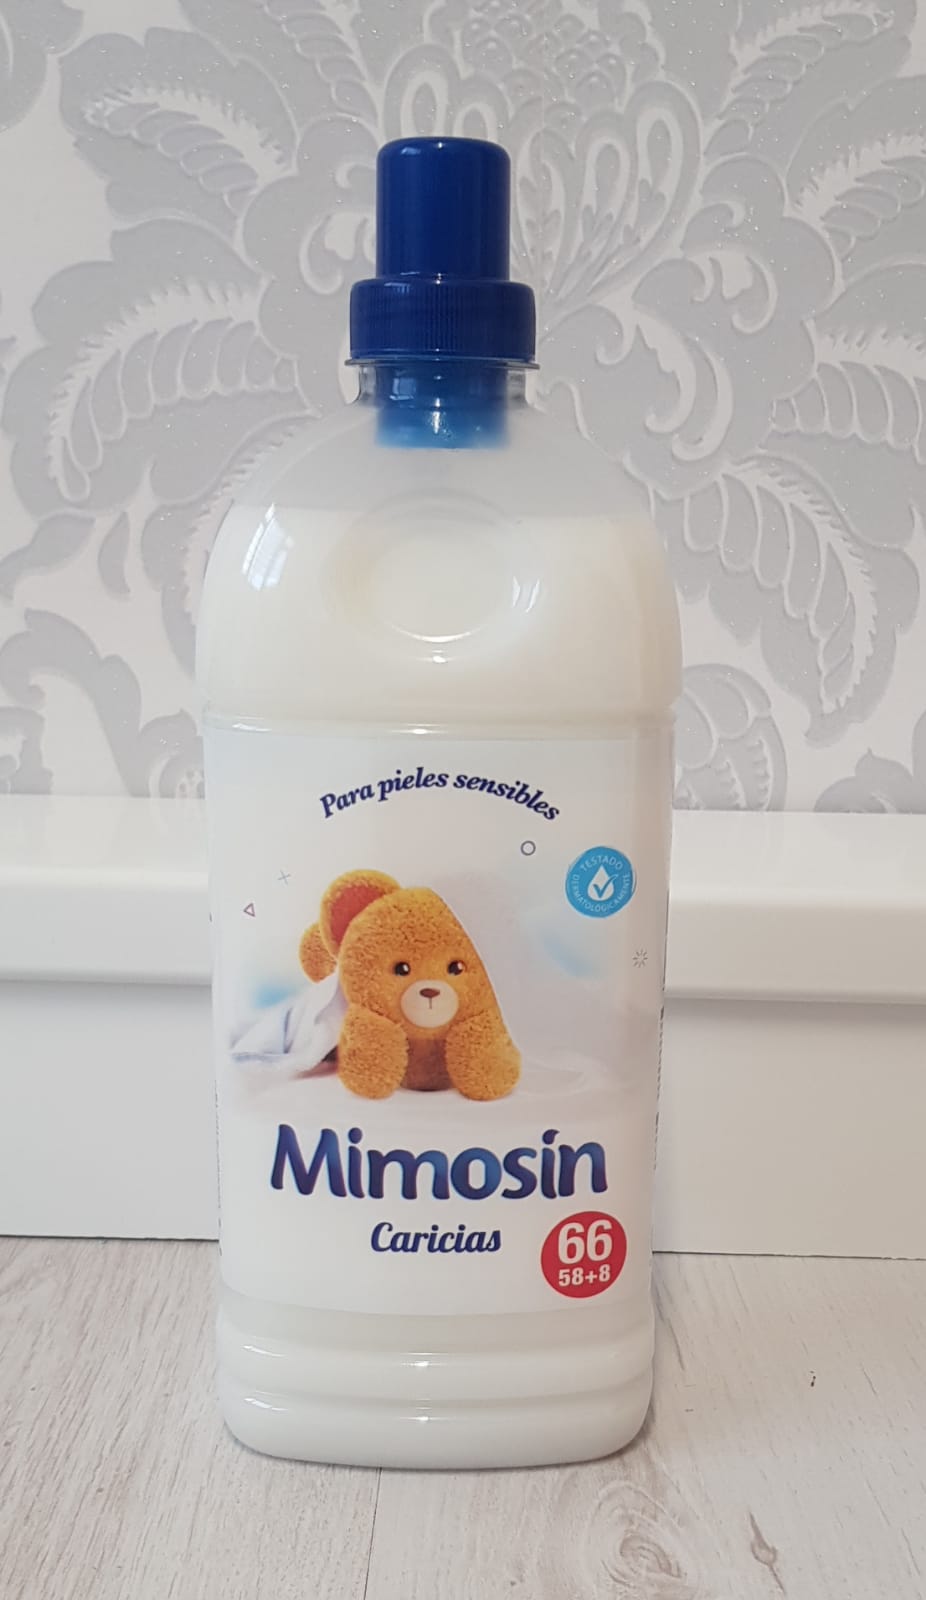 Mimosin fabric softener - 66 washes 🧸